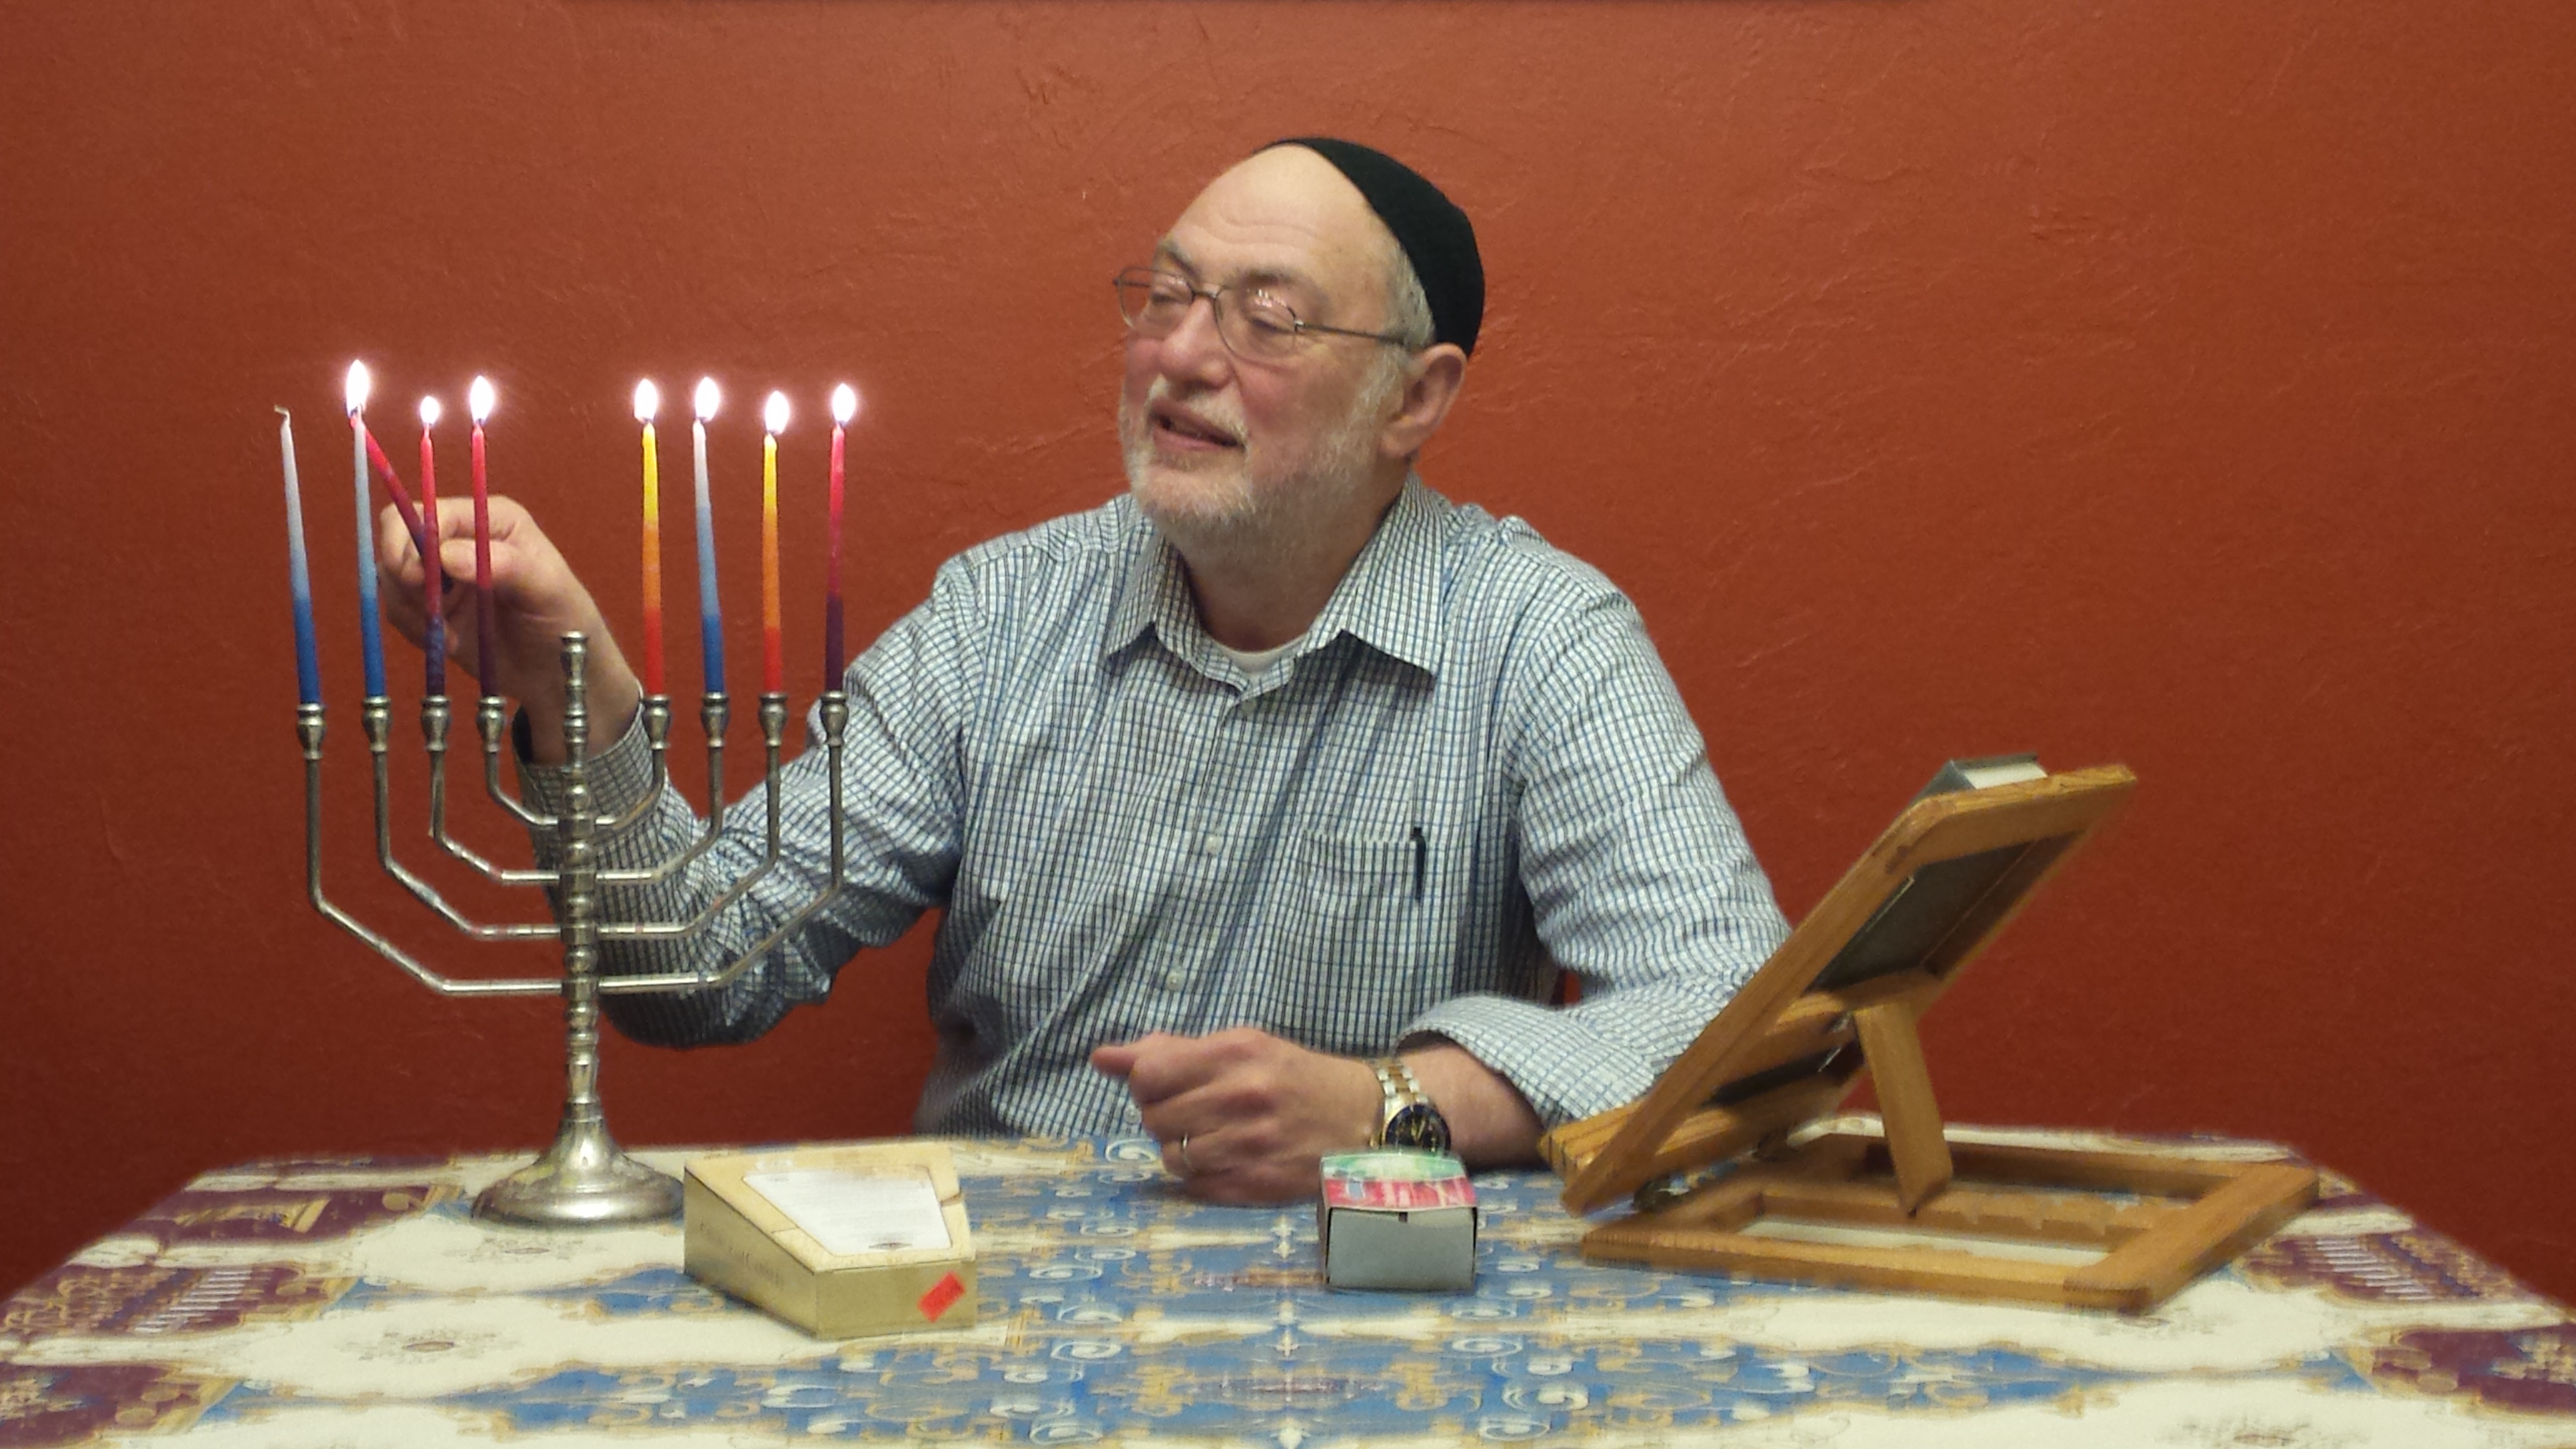 Rabbi Dov lights the menorah for Hanukkah (Photo by Kayla Desroches/KTOO)